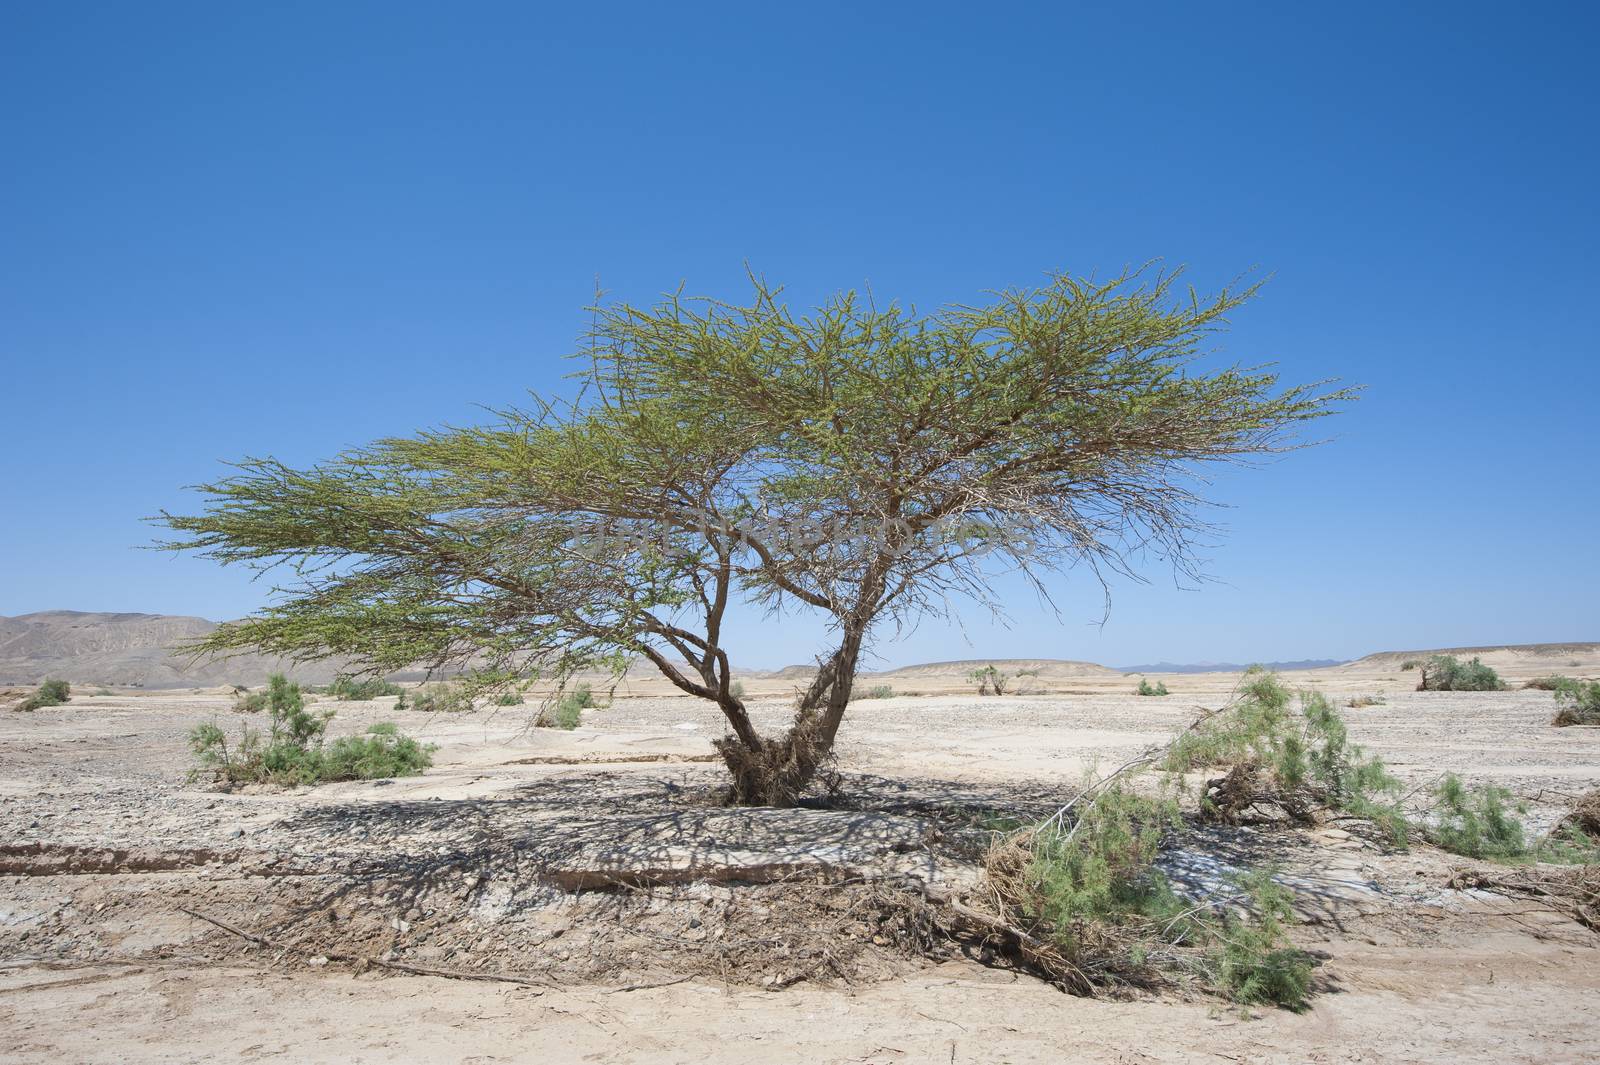 Sahara acacia tree in desert landscape by paulvinten